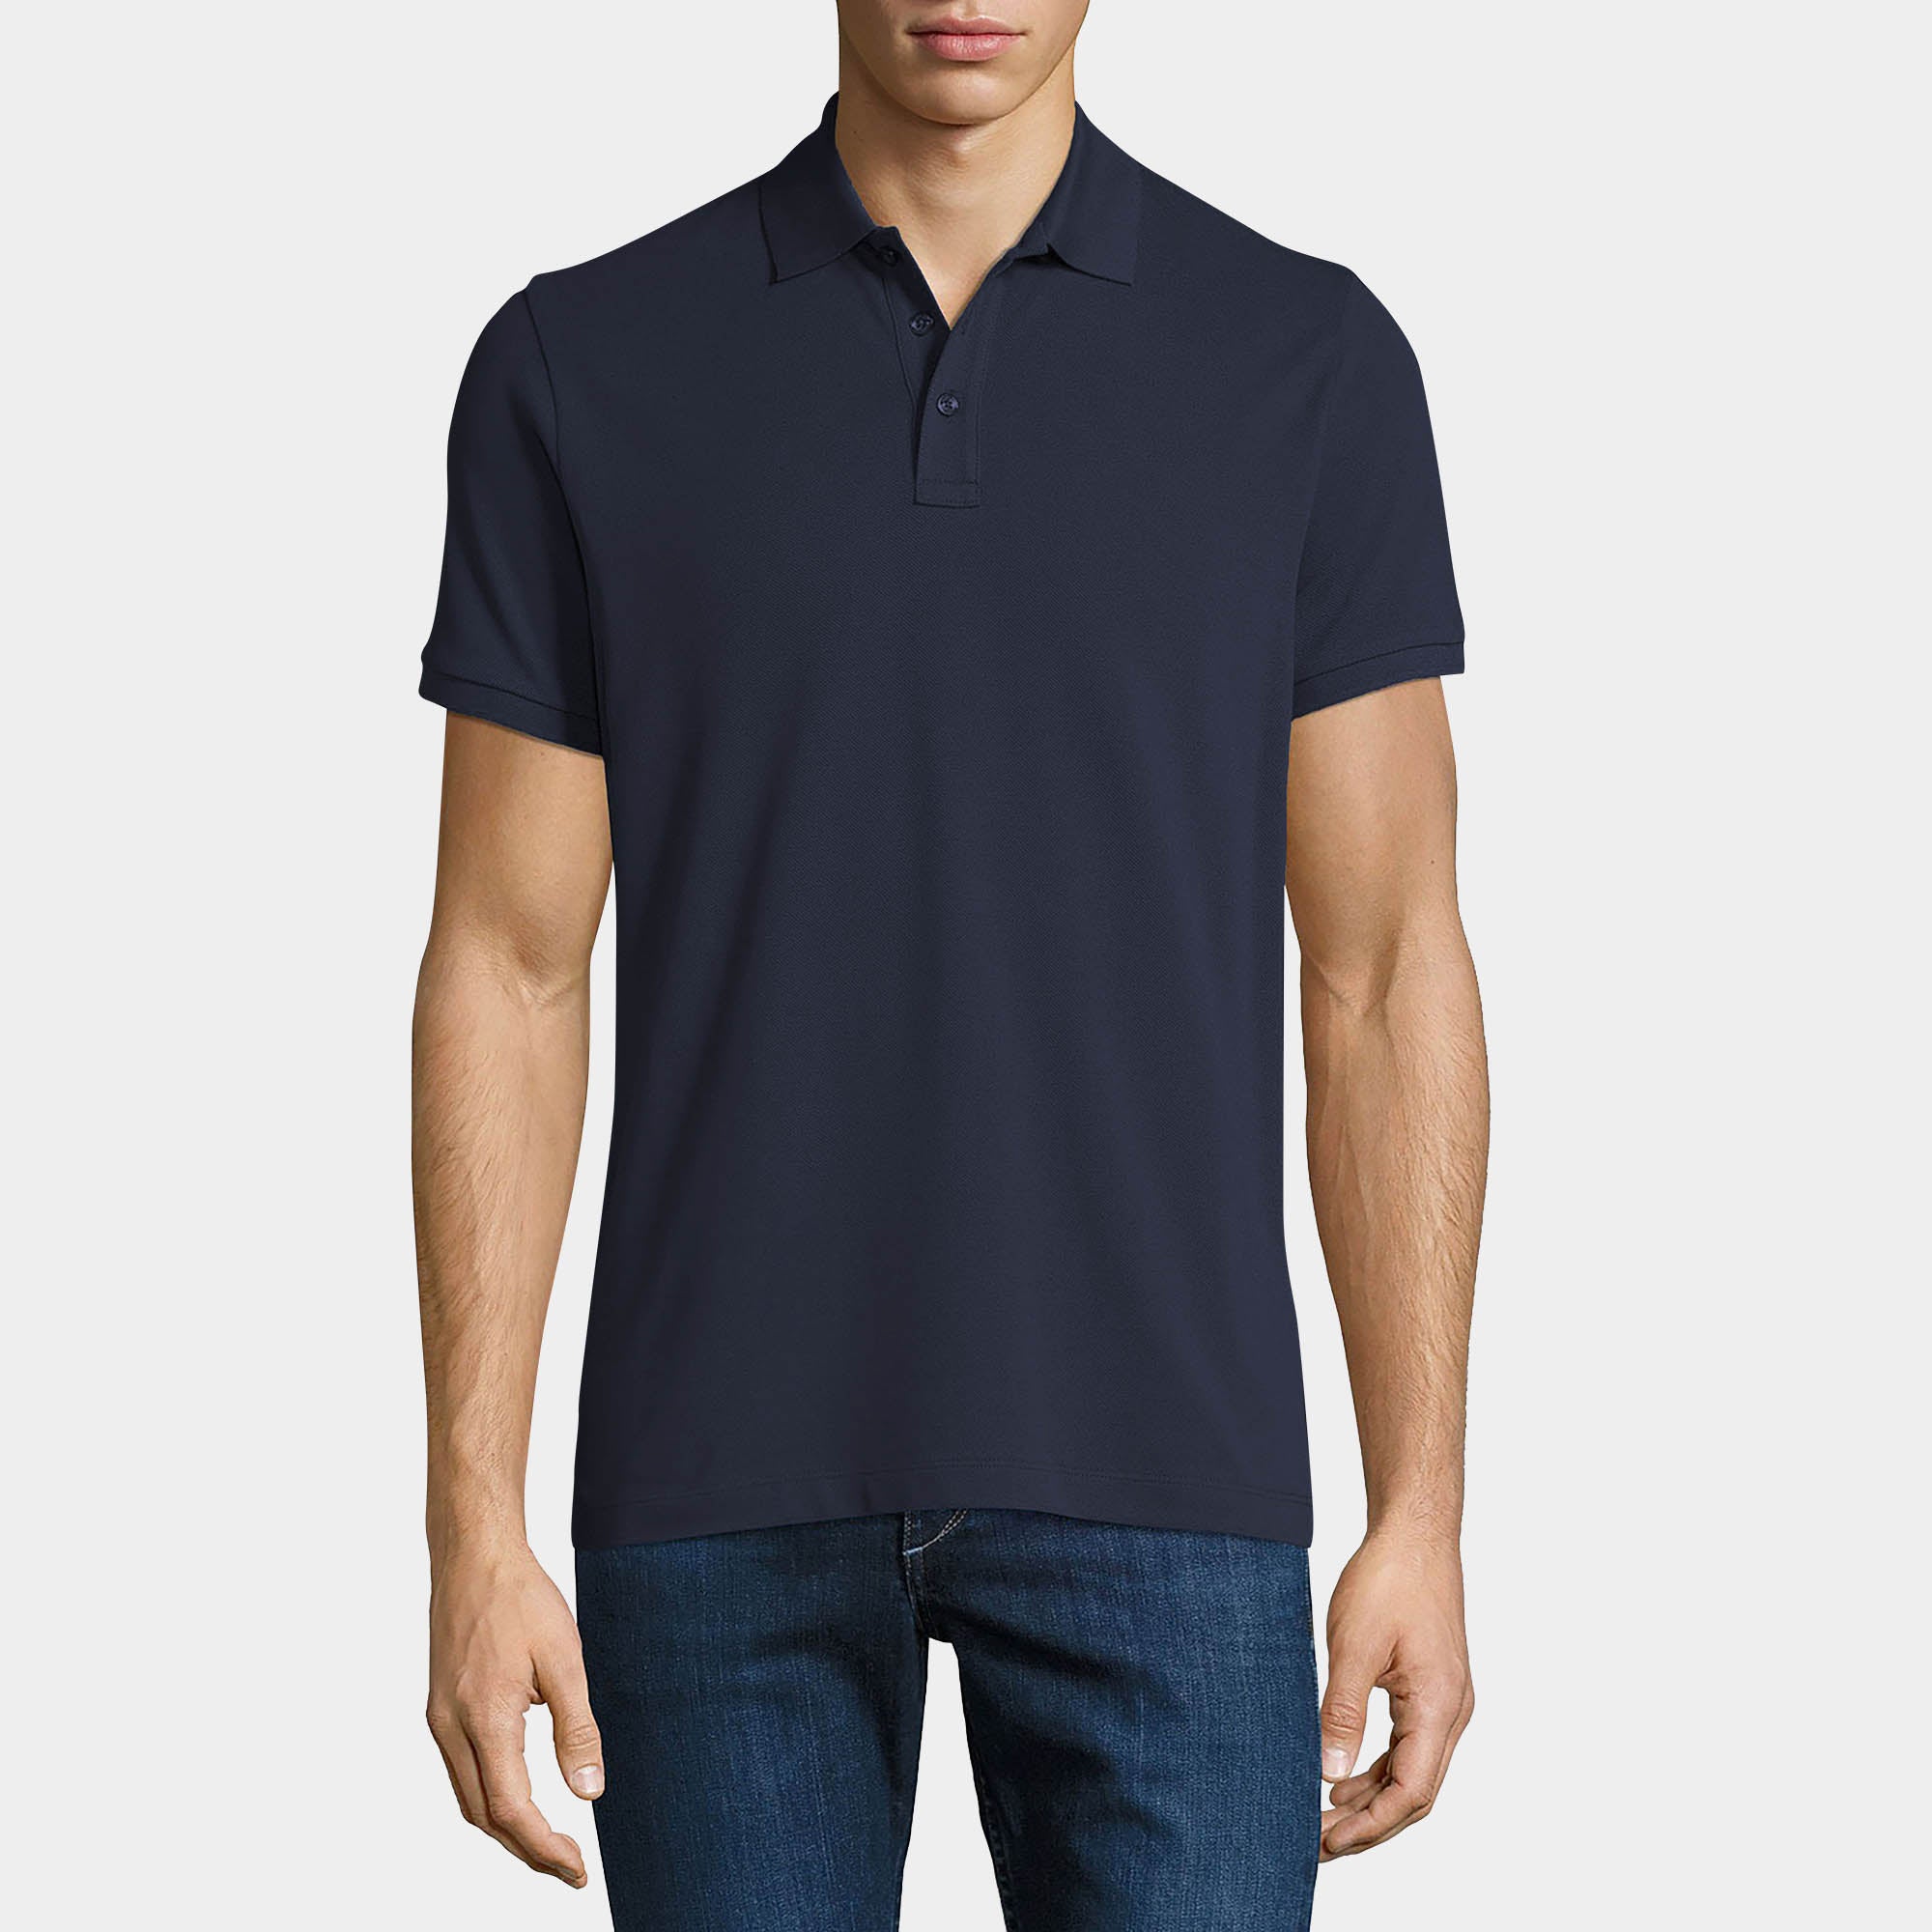 mens polo shirts_sports polos_golf polo_polo t shirts for men_custom polo shirts_cheap polo shirts_polo shirts on sale_designer polo shirts_Navy